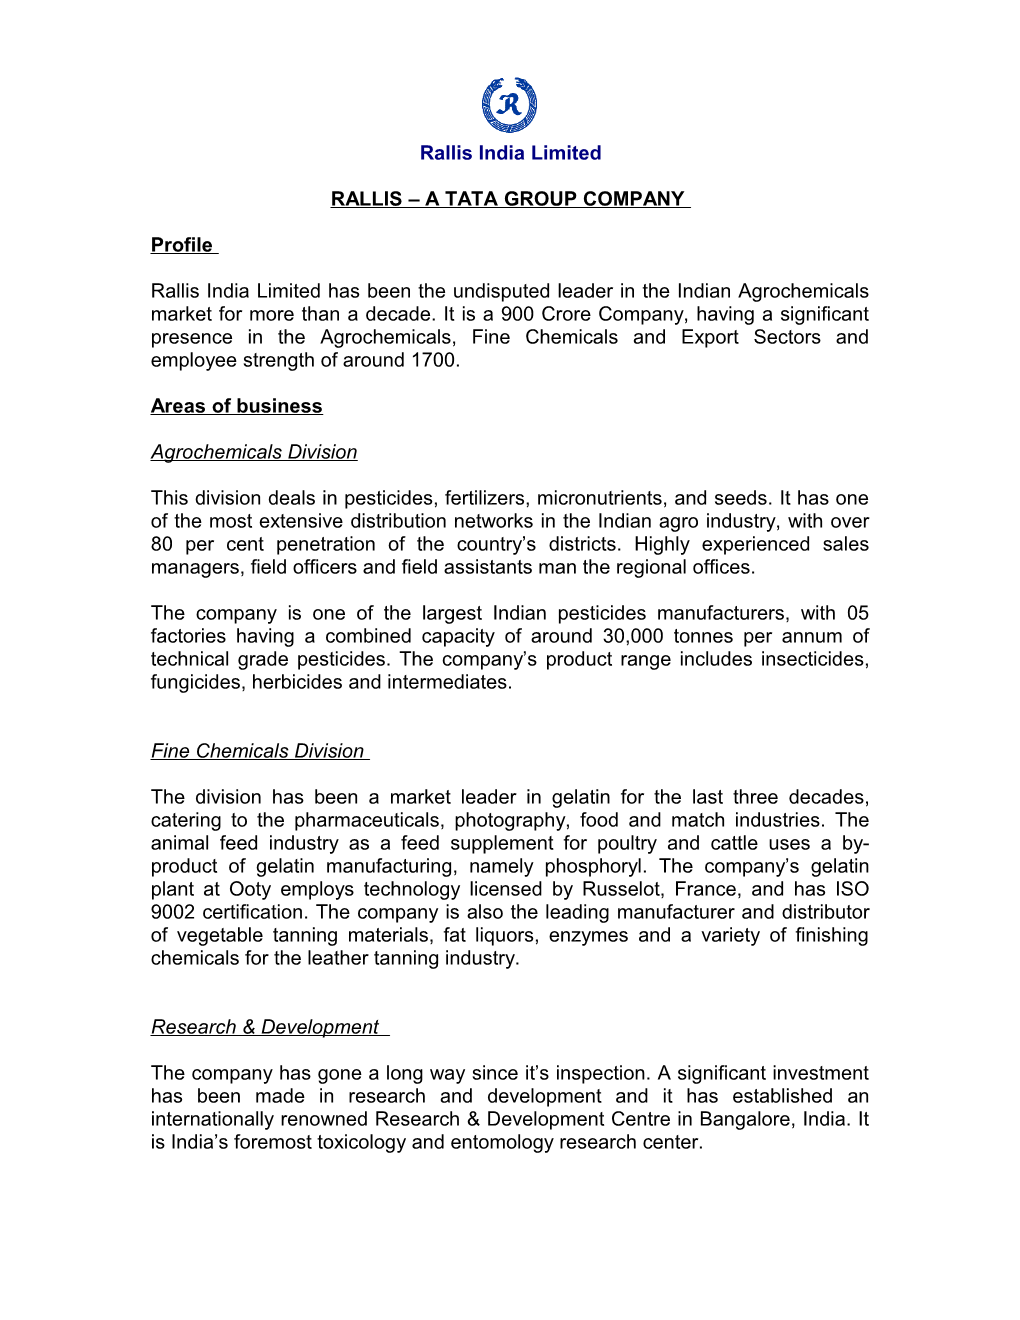 Rallis a Tata Group Company